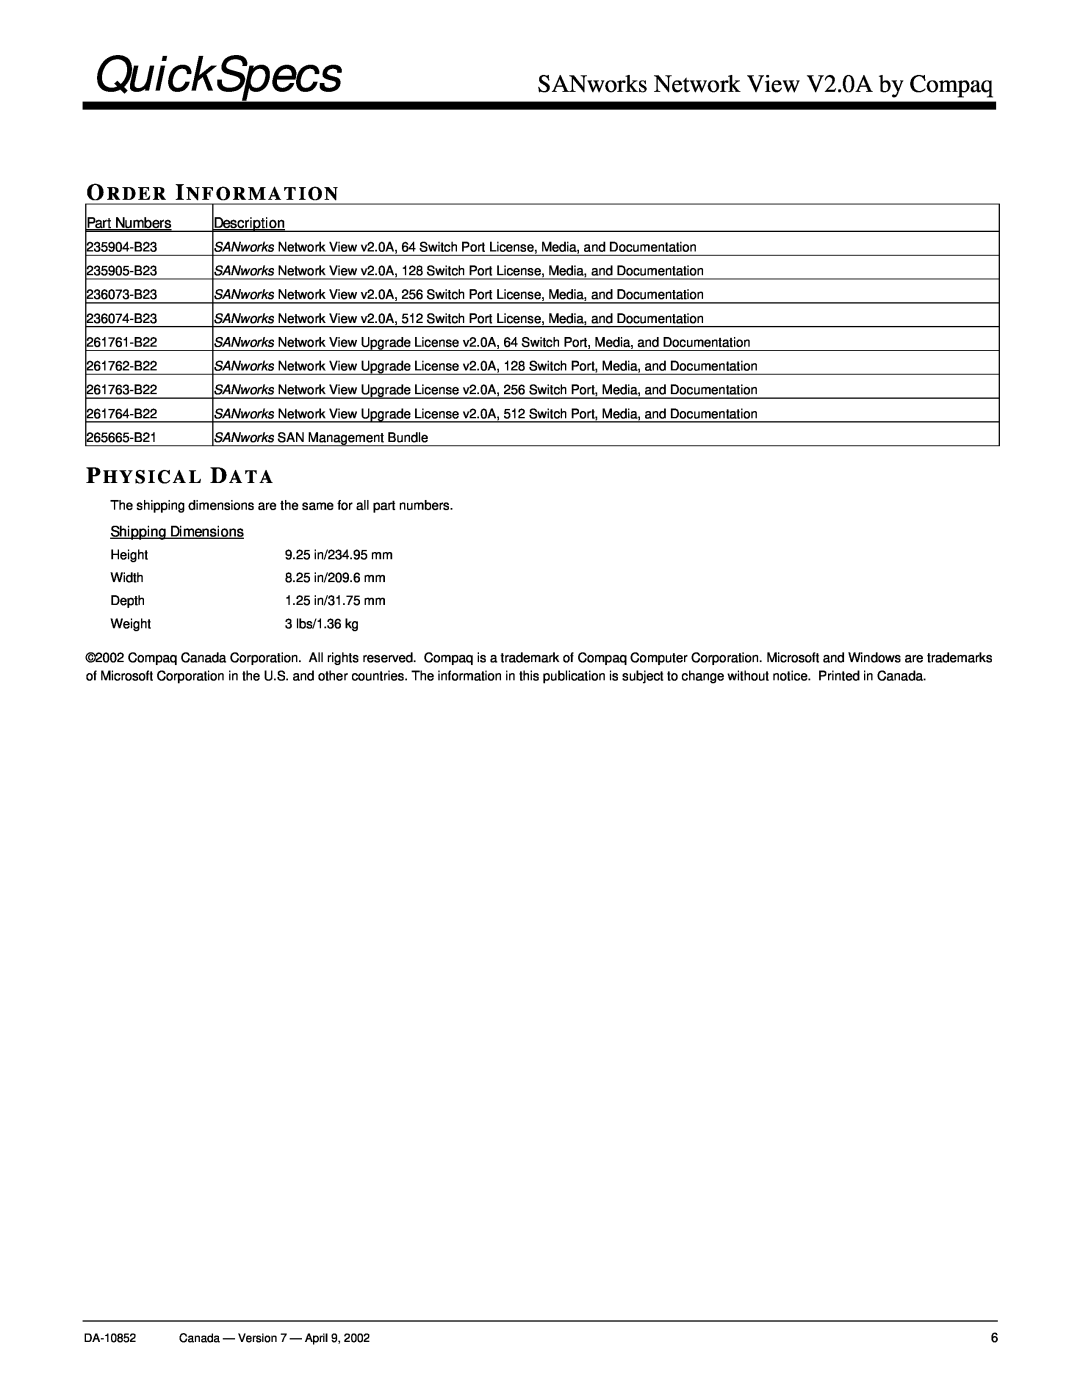 Compaq DA10682 manual Order Information, Physical Data, QuickSpecs, SANworks Network View V2.0A by Compaq 